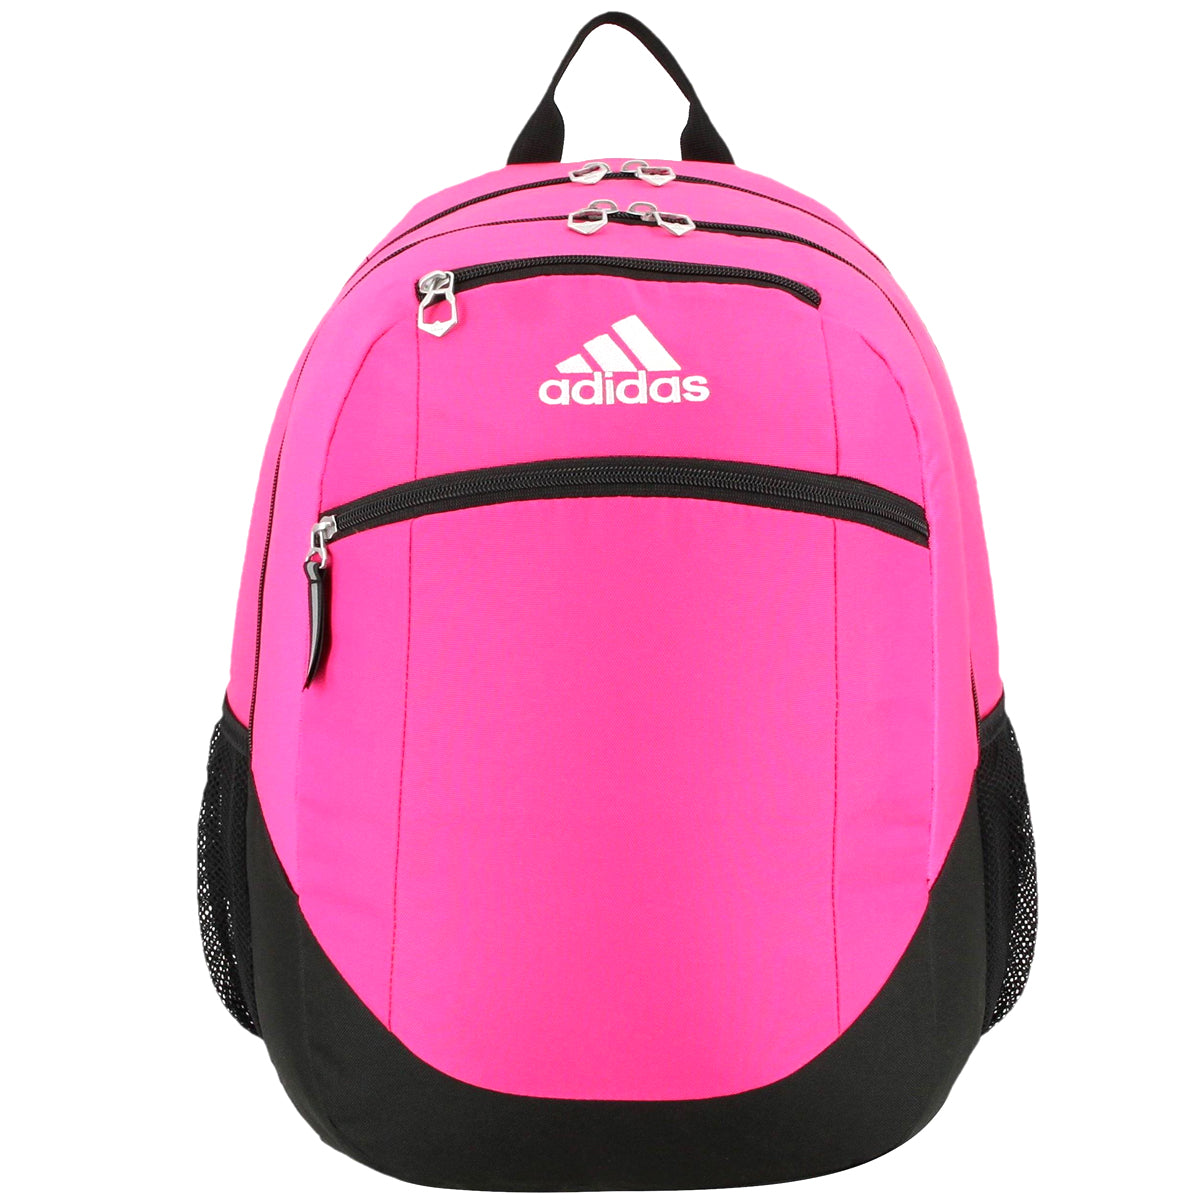 adidas Striker II Team Backpack Bags Adidas One Size Shock Pink/Black/White 